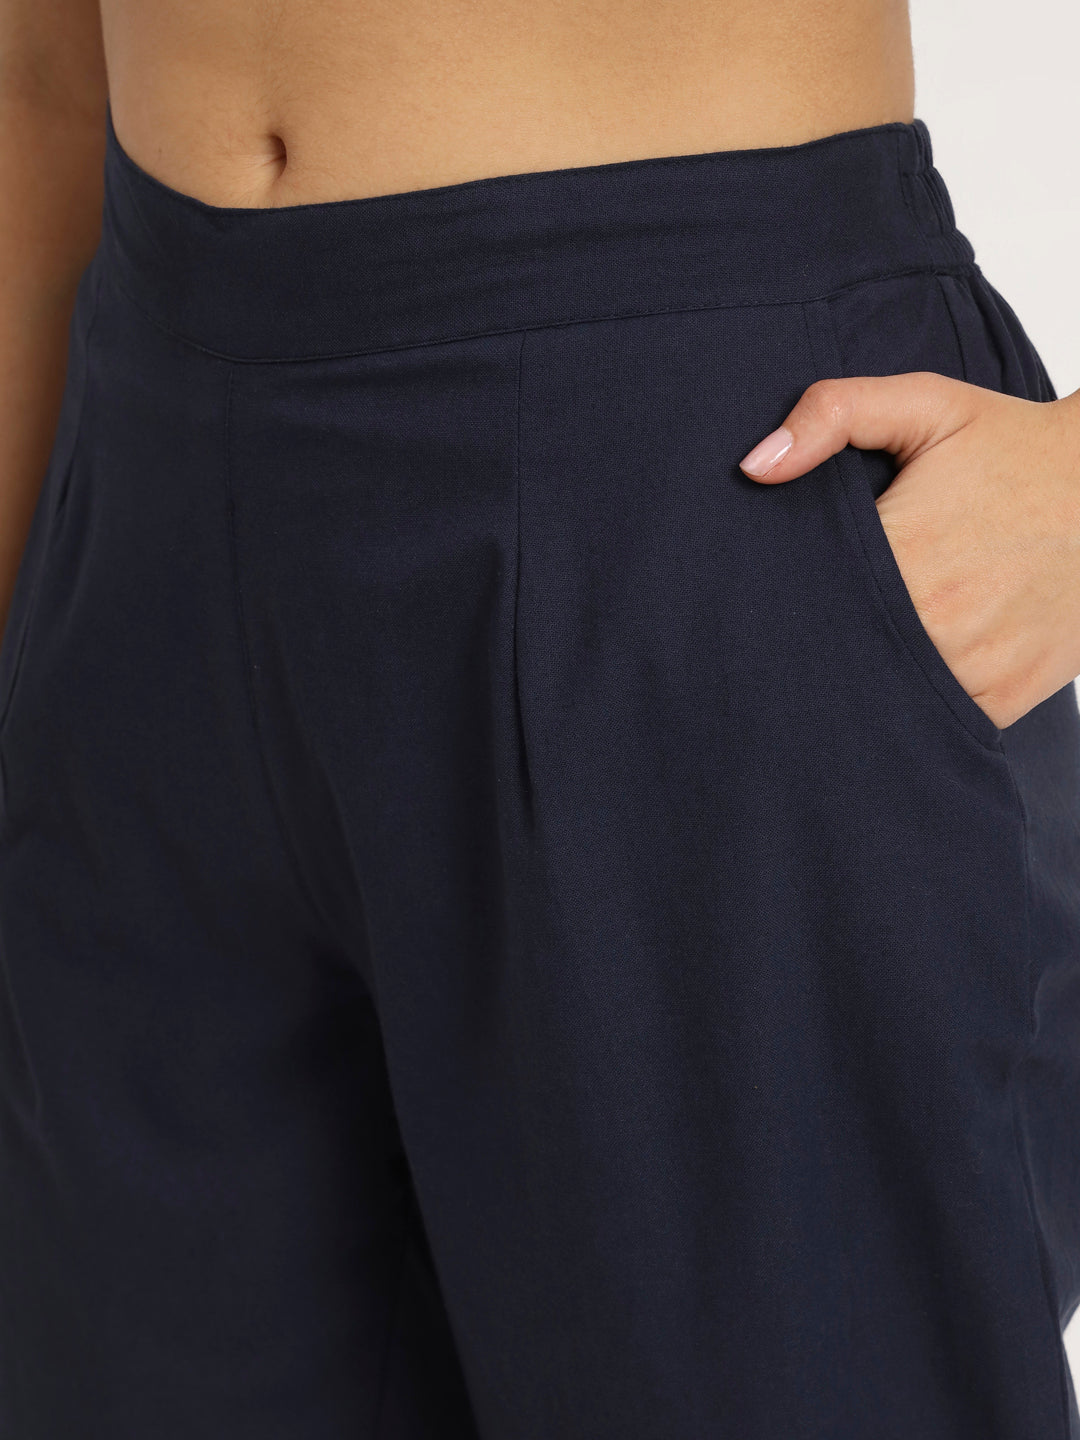 navy blue Cotton pants for women